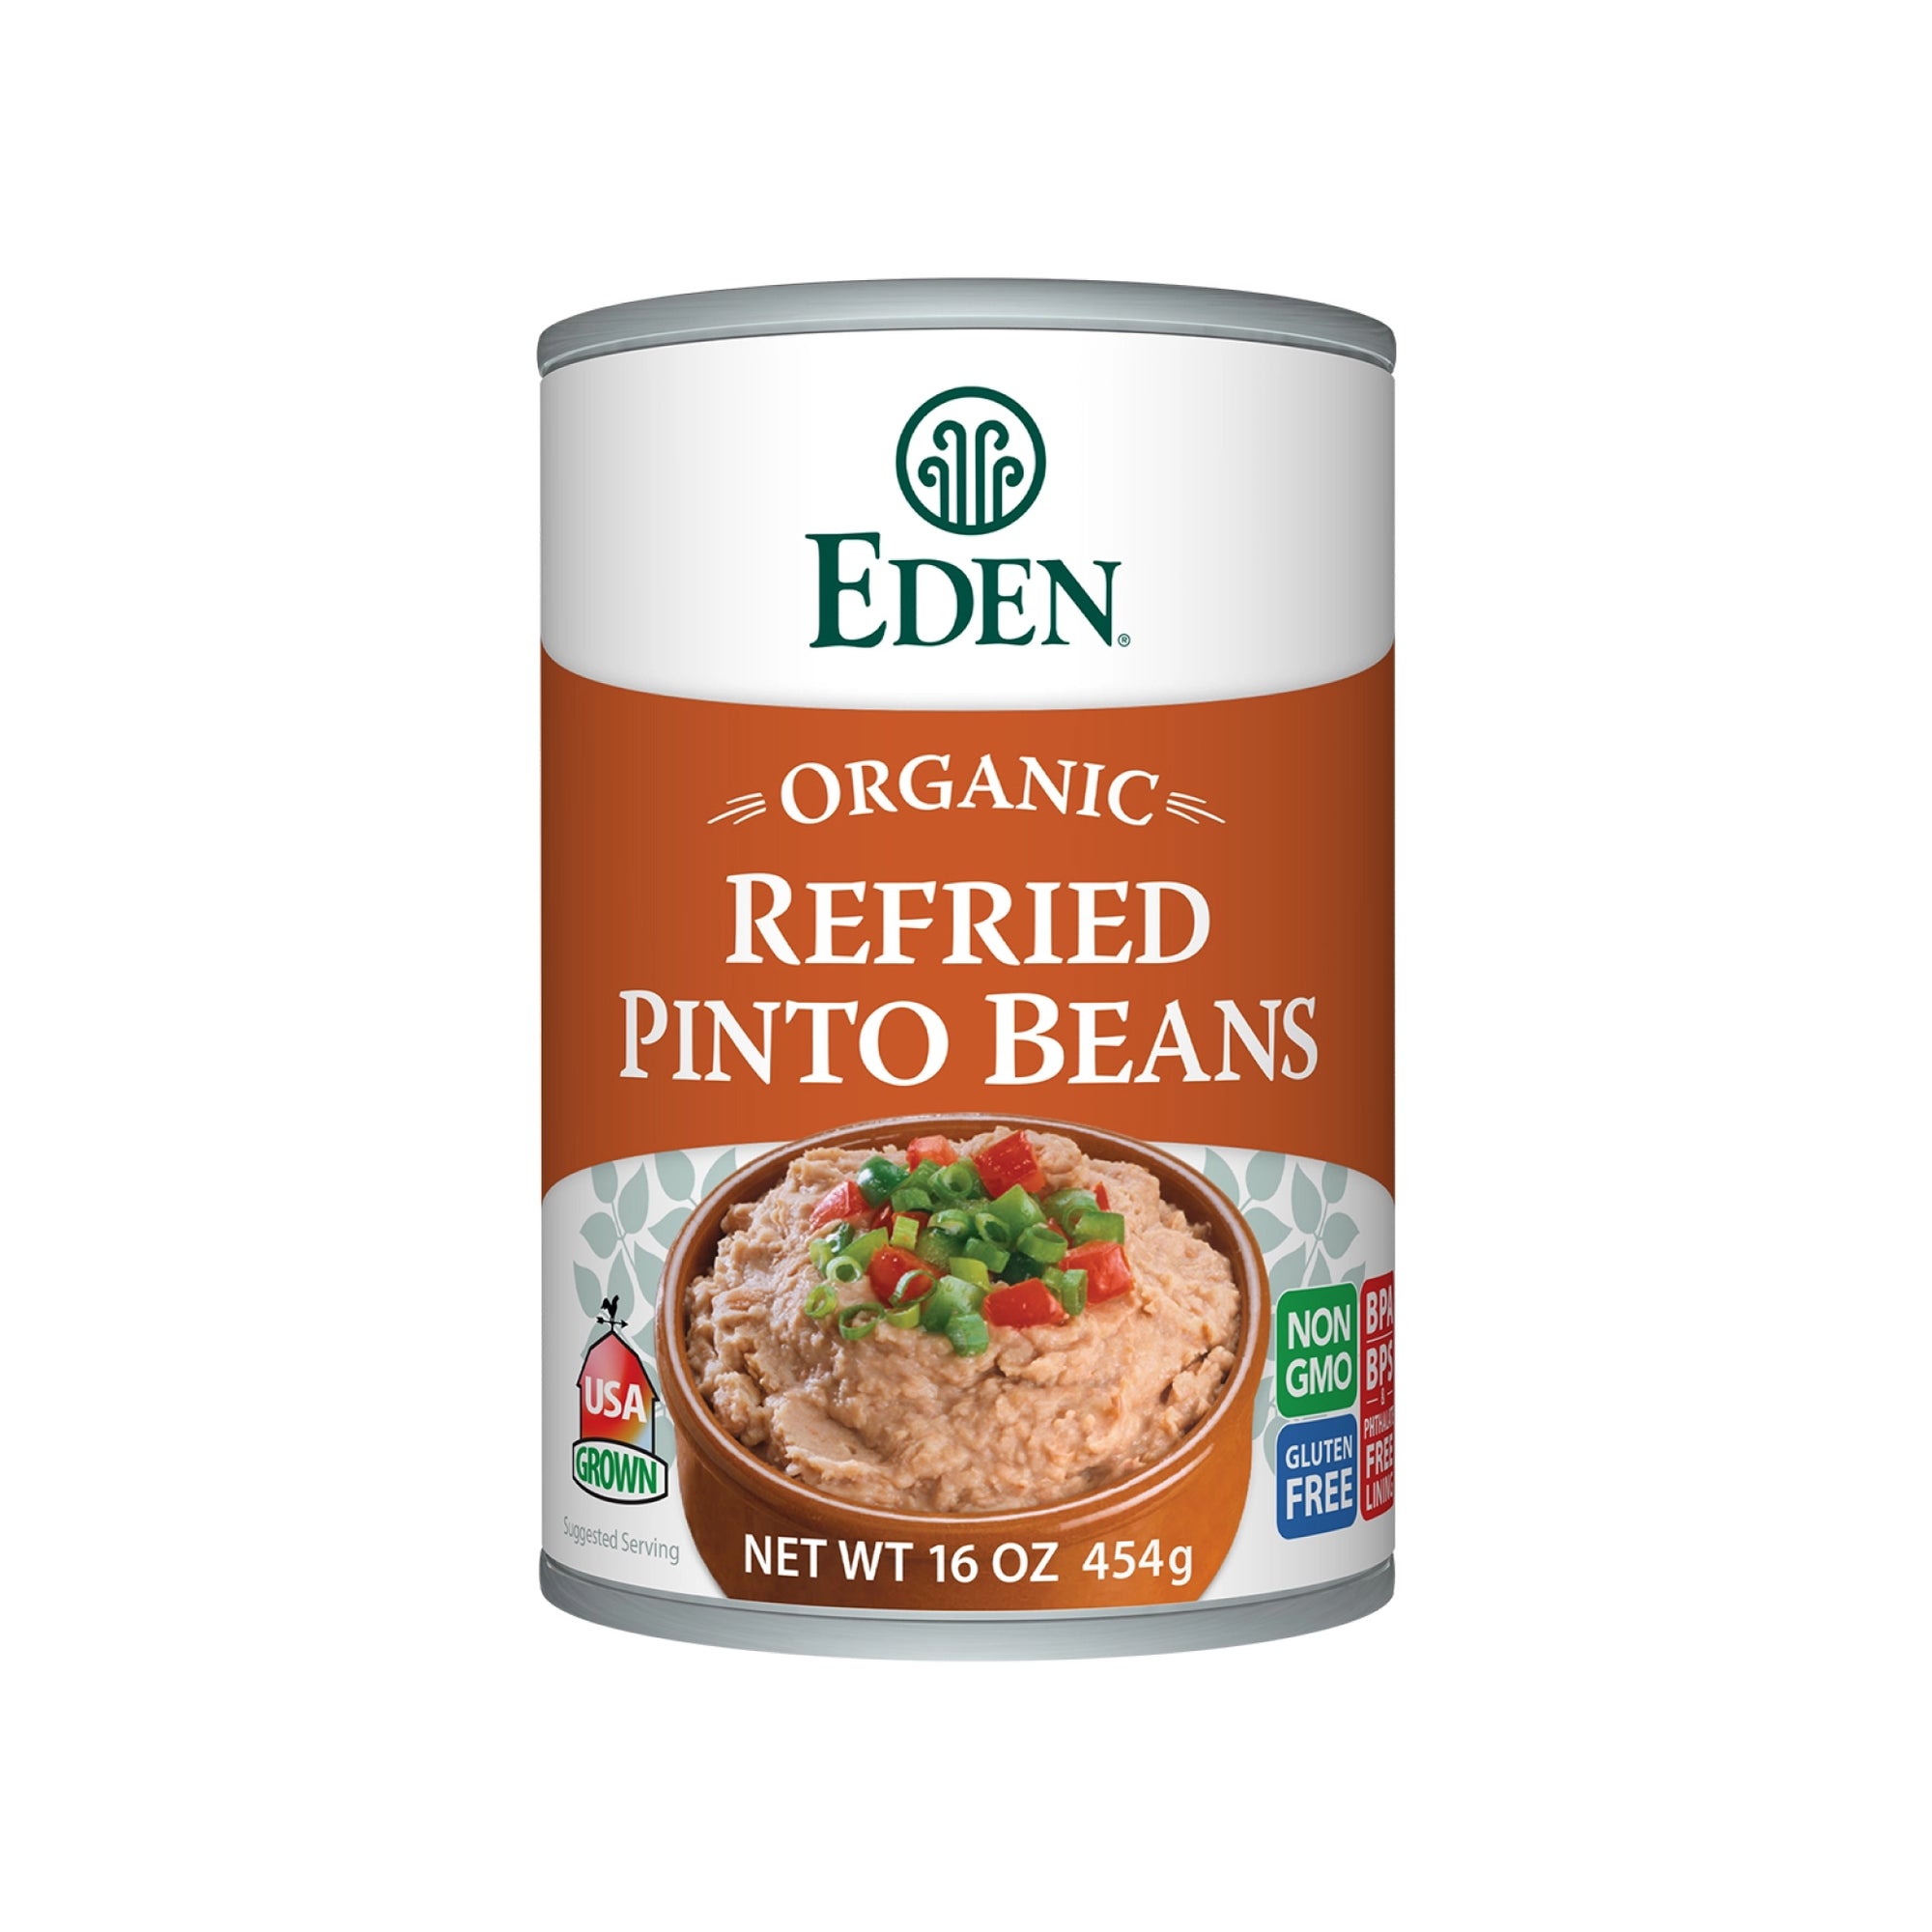 Eden Refried Organic Pinto Beans 454g